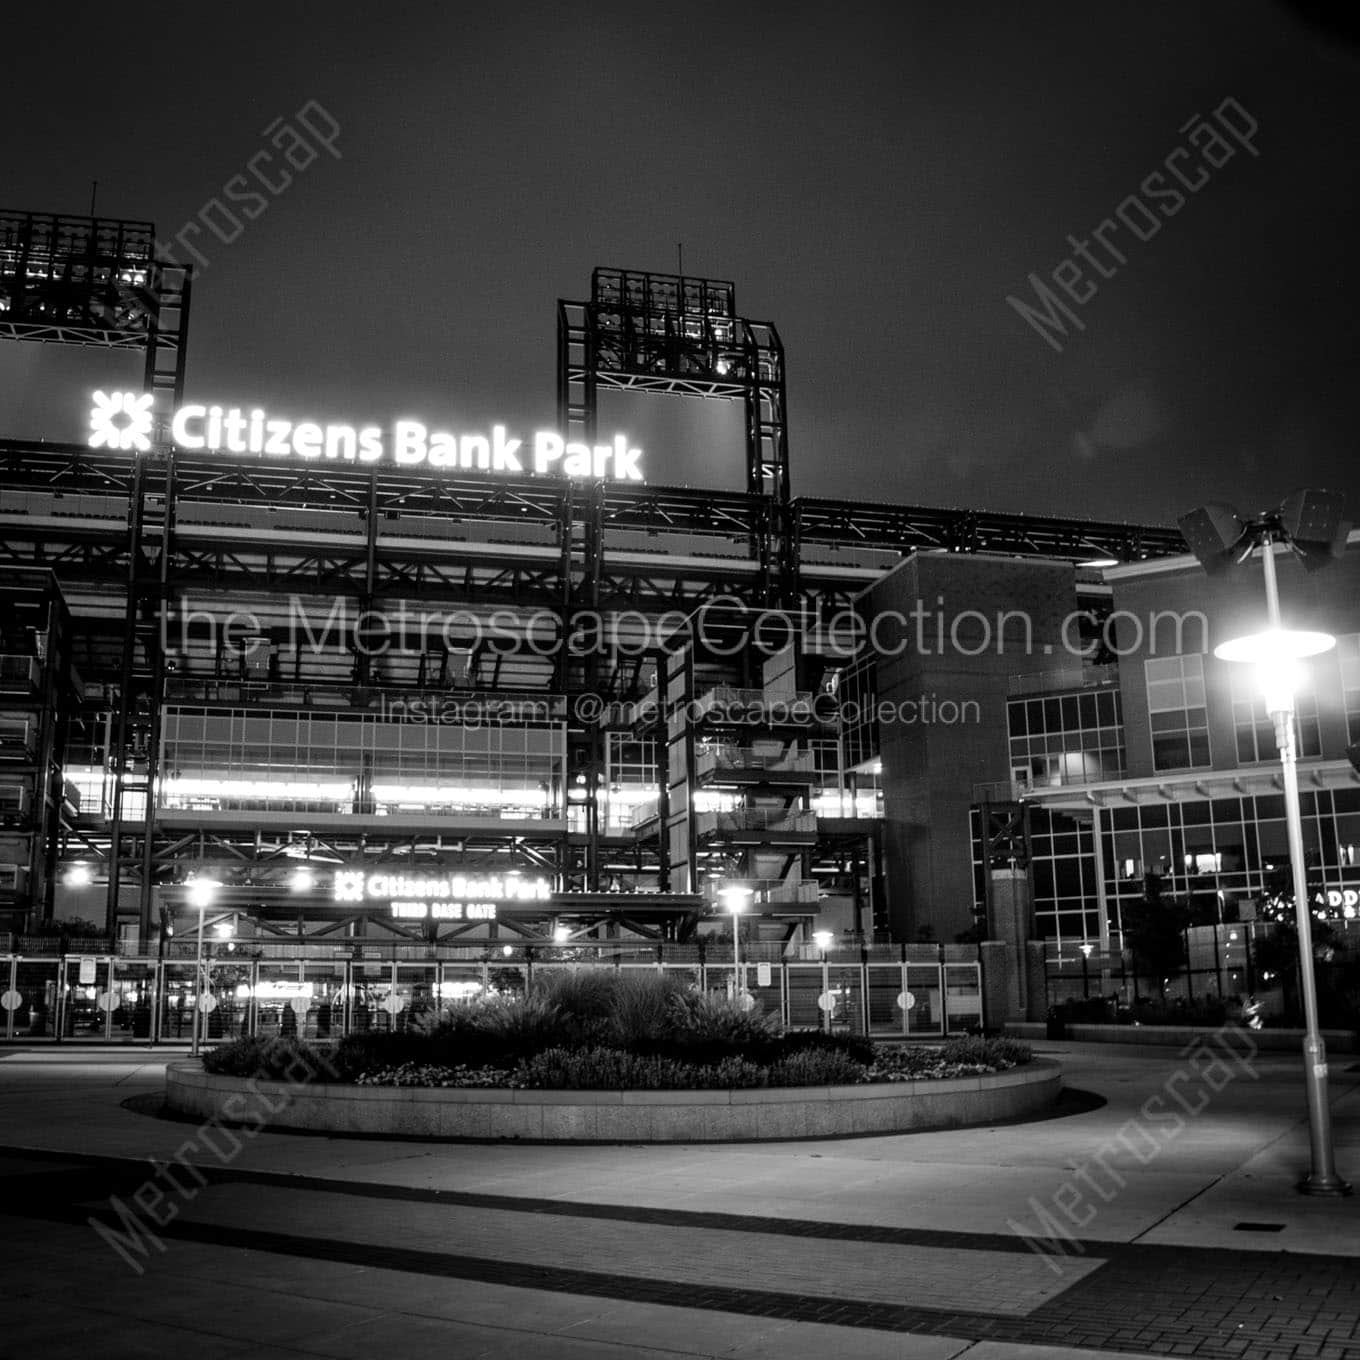 citizens bank park at night Black & White Wall Art